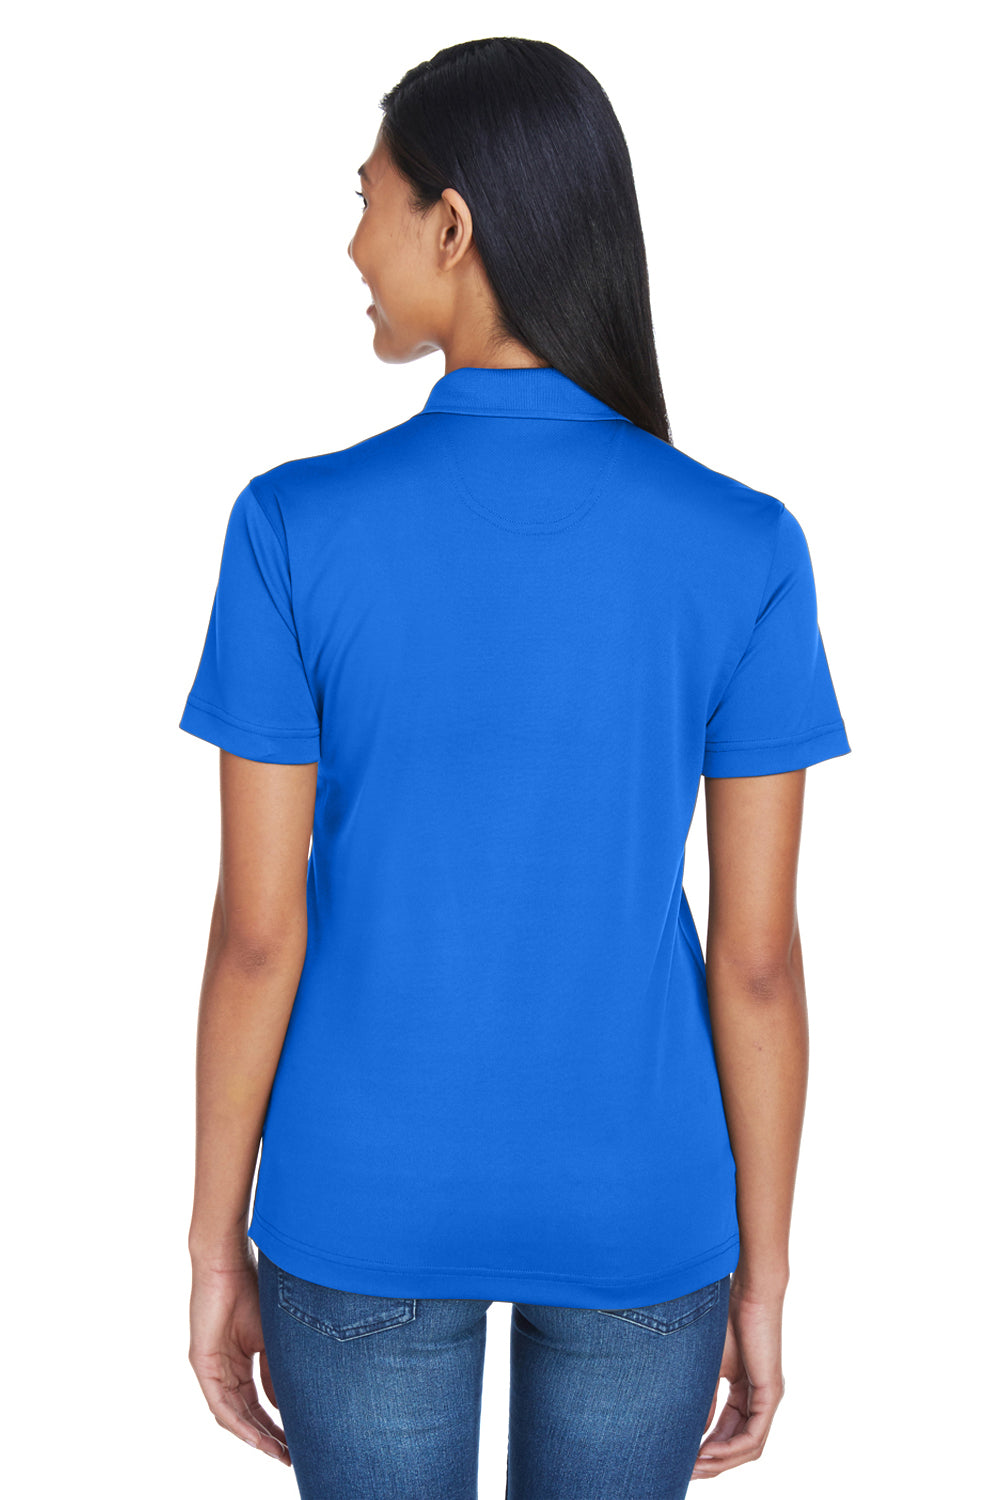 UltraClub 8404 Womens Cool & Dry Moisture Wicking Short Sleeve Polo Shirt Royal Blue Back